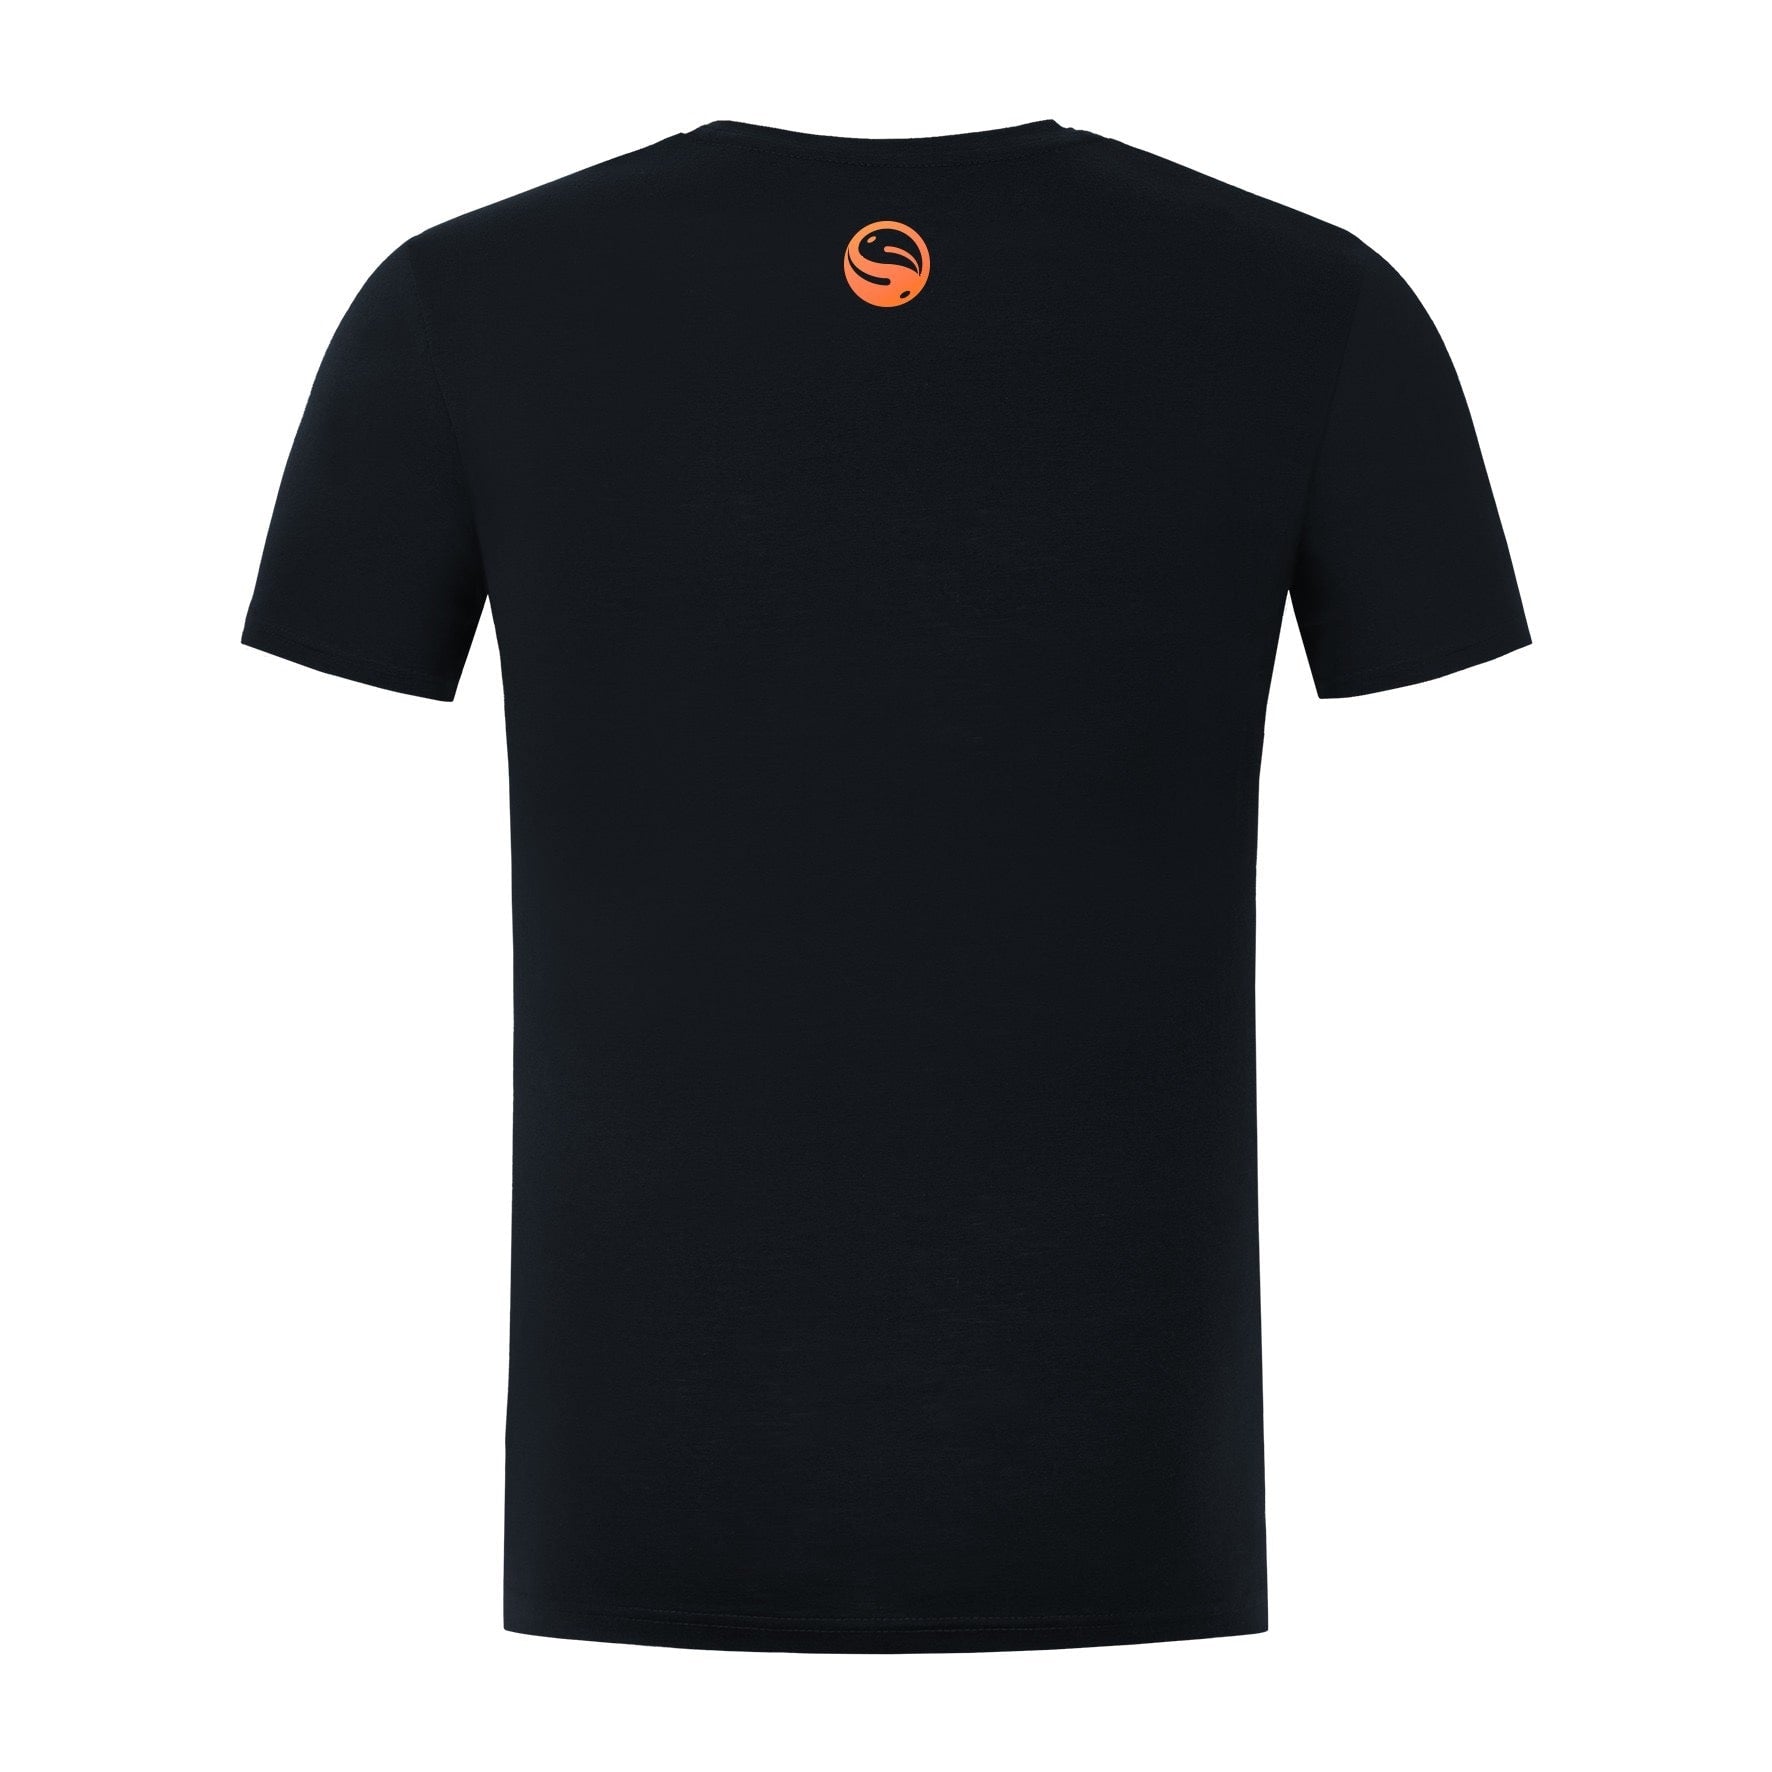 guru gradient connect tee black t-shirt